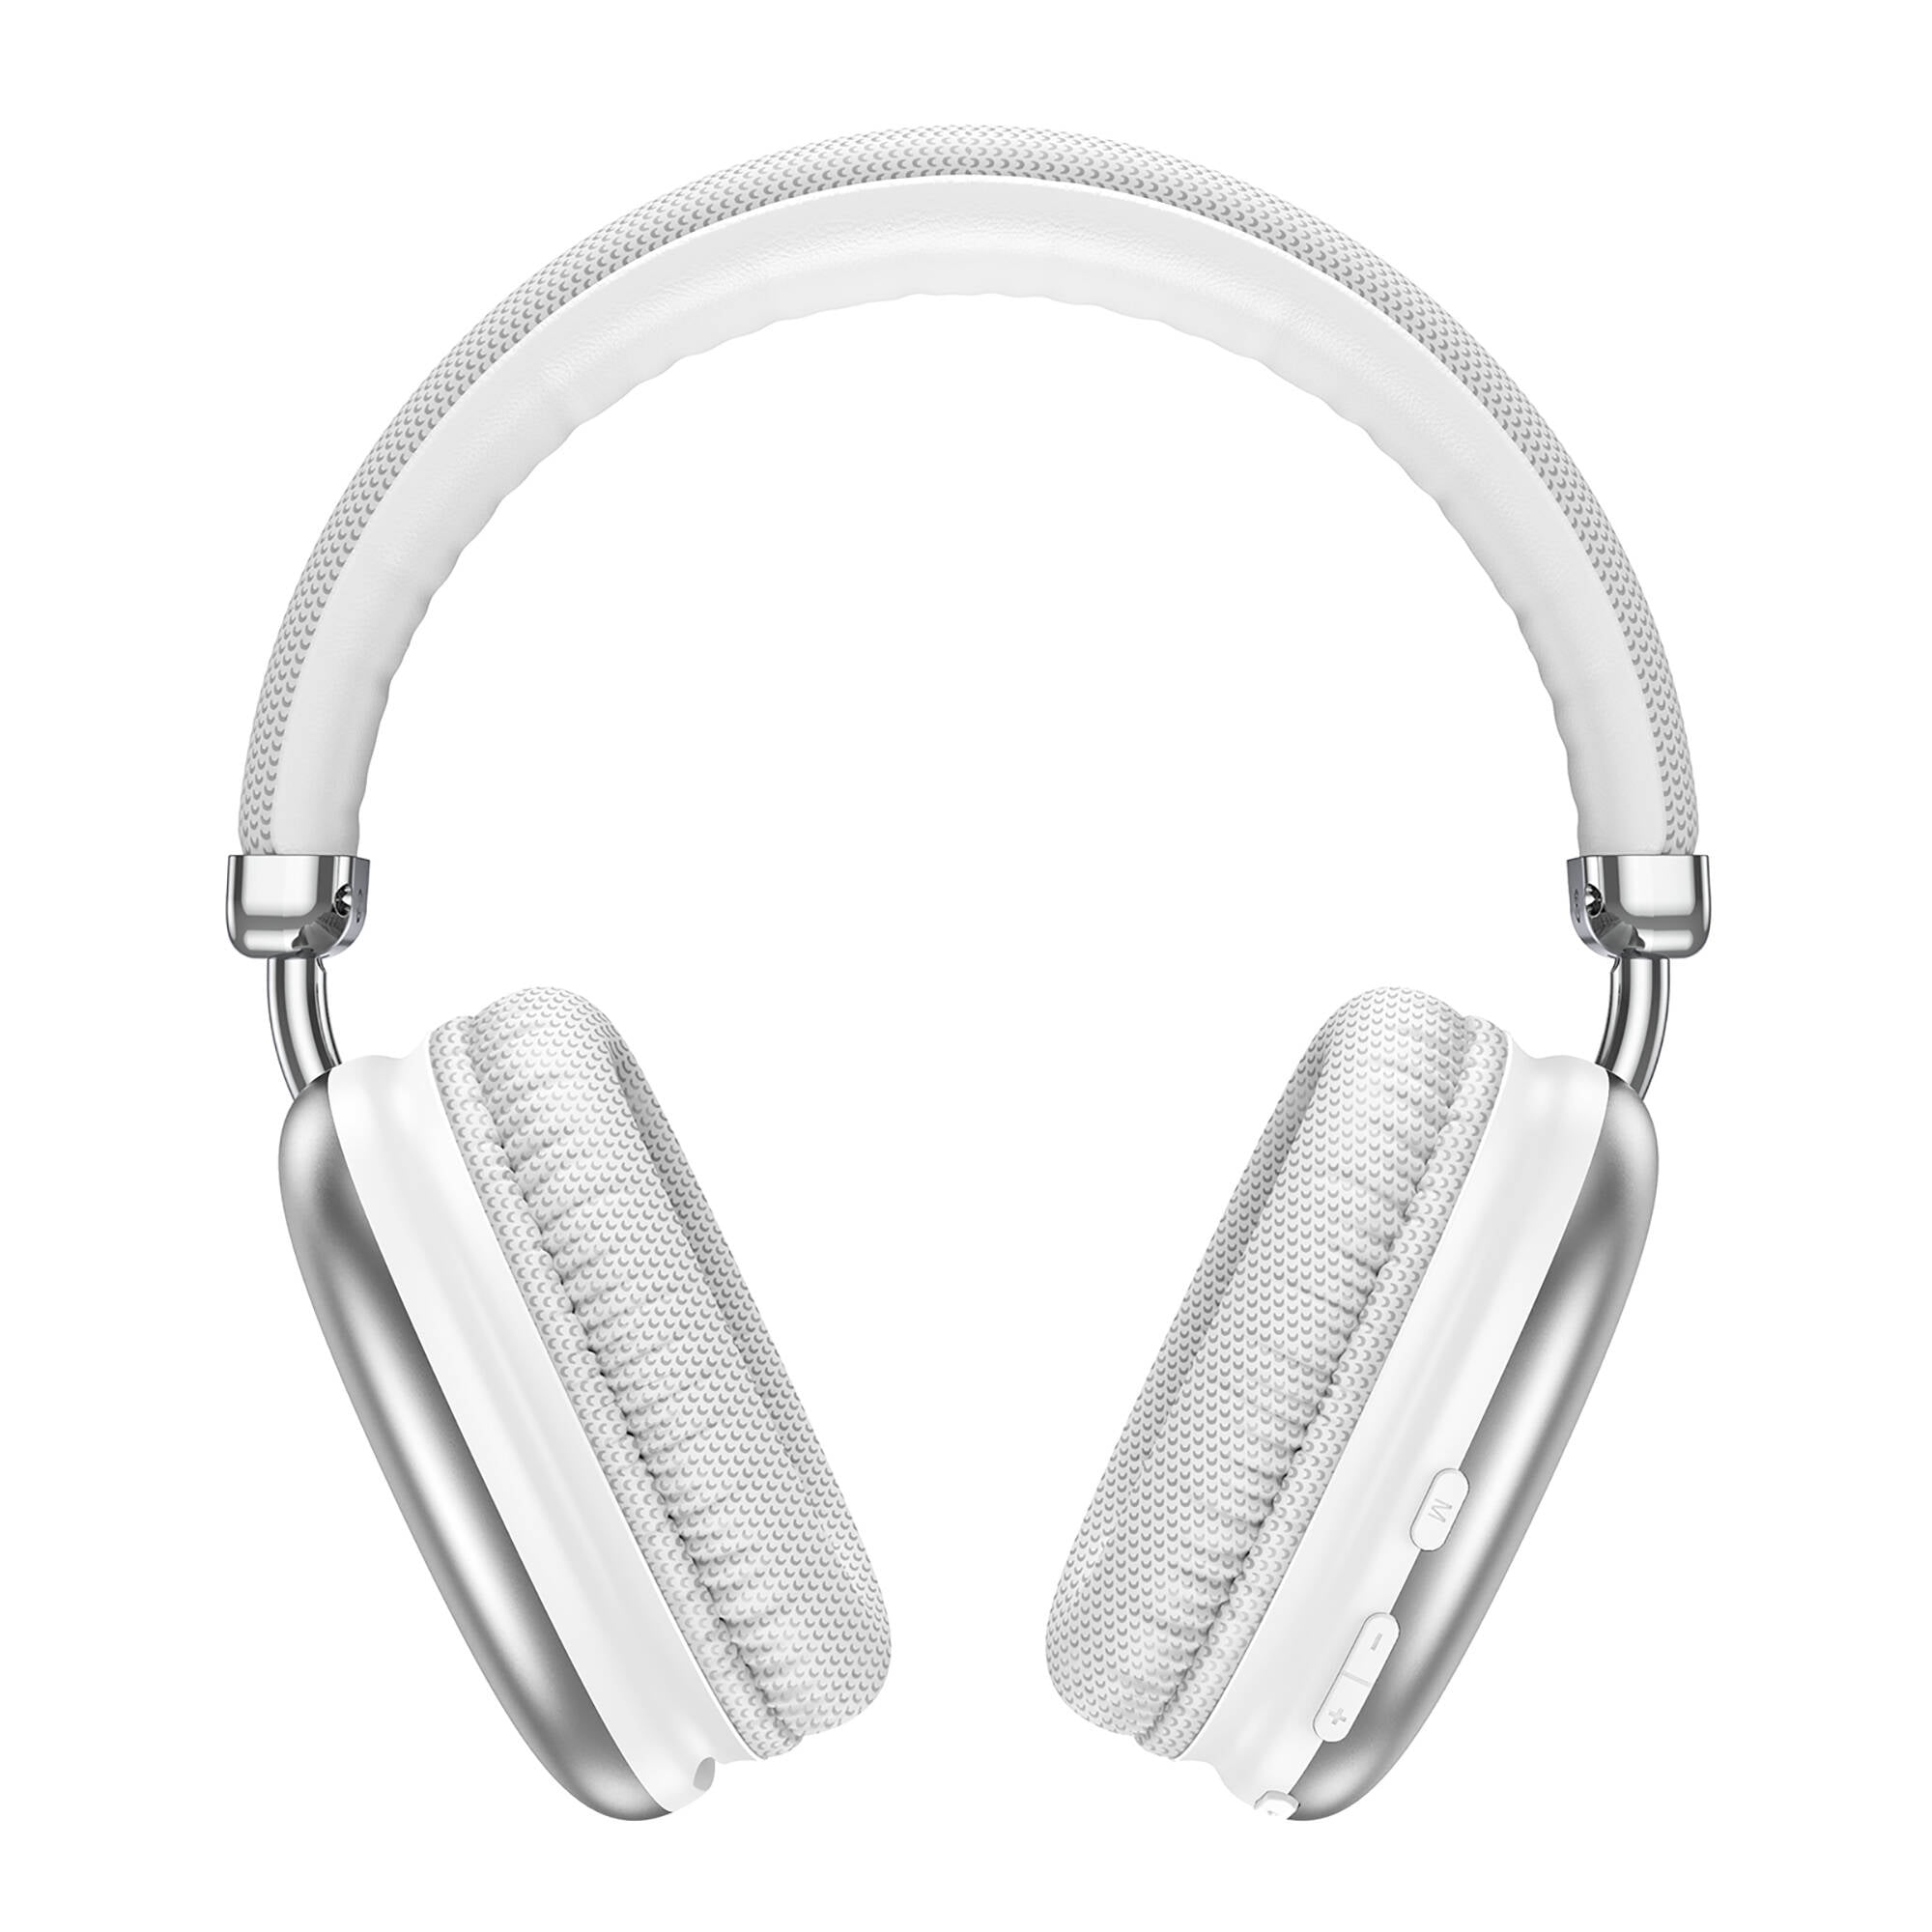 Sony Interactive Entertainment PULSE Elite wireless headset White  1000038059 - Best Buy